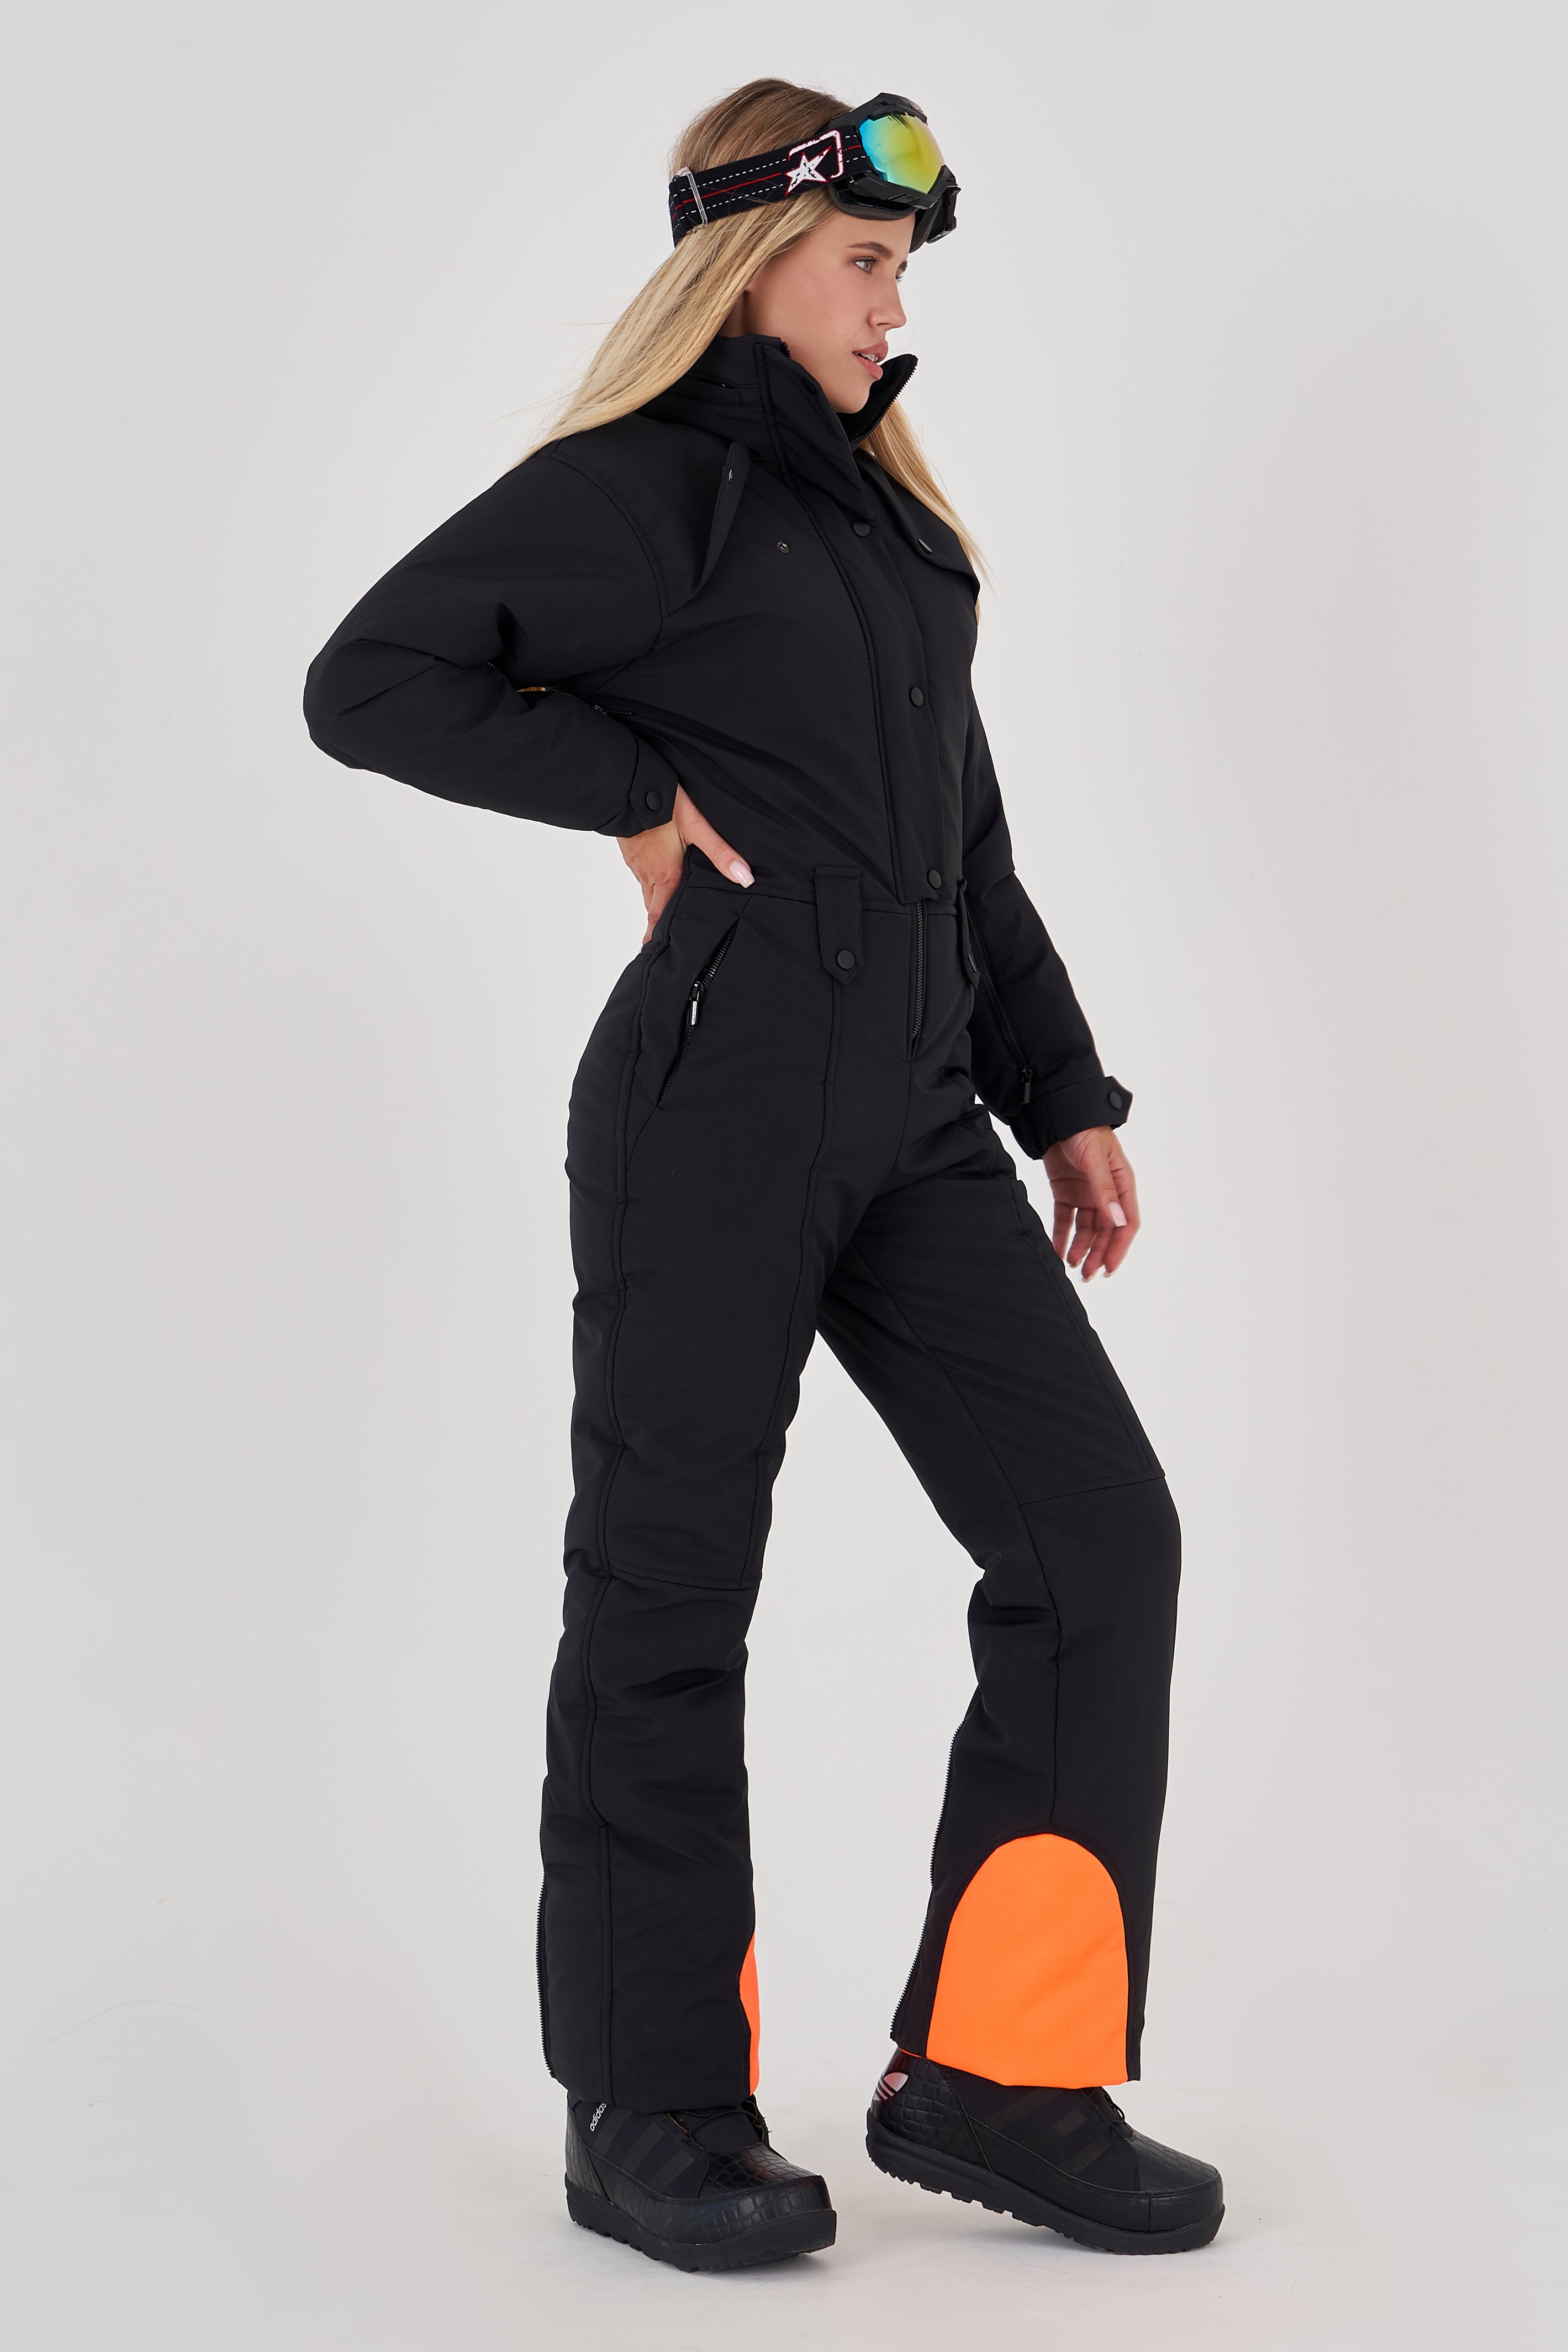 Black Ski Suit Women's RAINIER BLACK ORANGE Elements